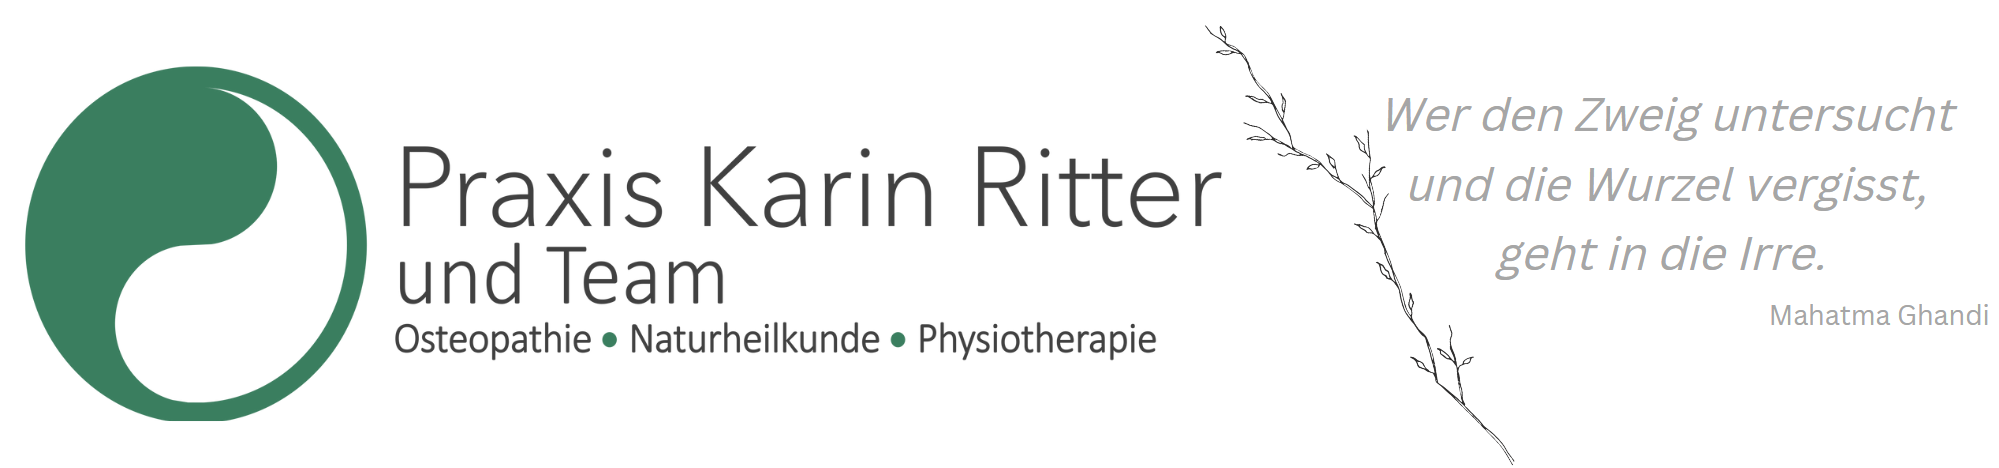 Karin Ritter Osteopathie